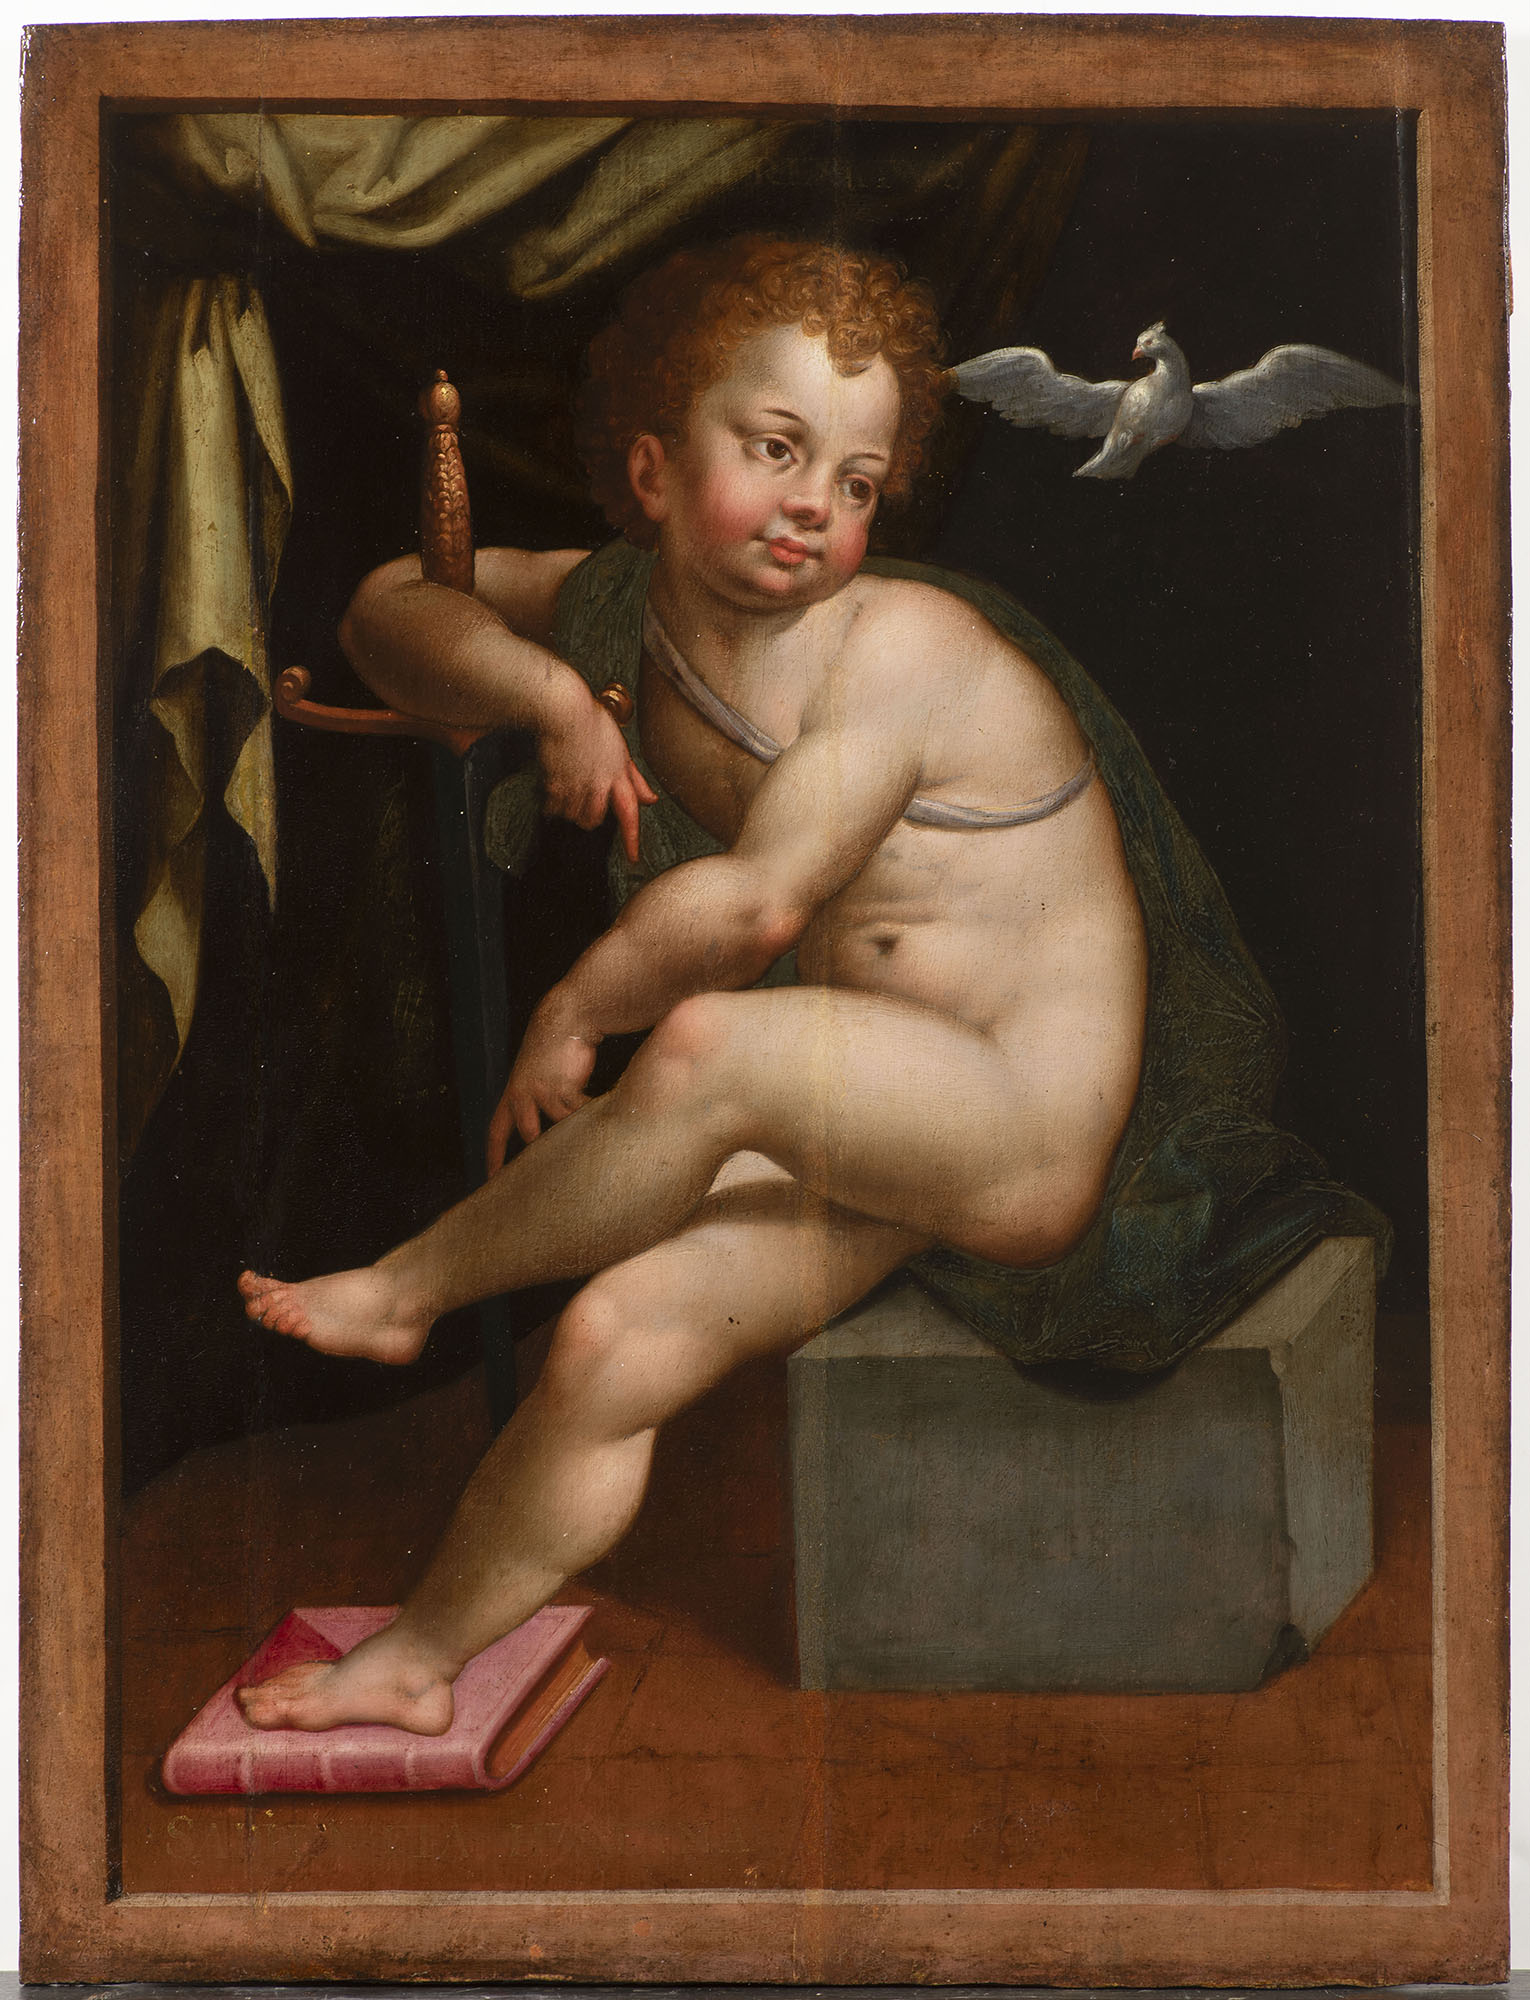 Dutch artist around 1580-1600, circle of Jacob de Backer, Allegory of the Reborn Man